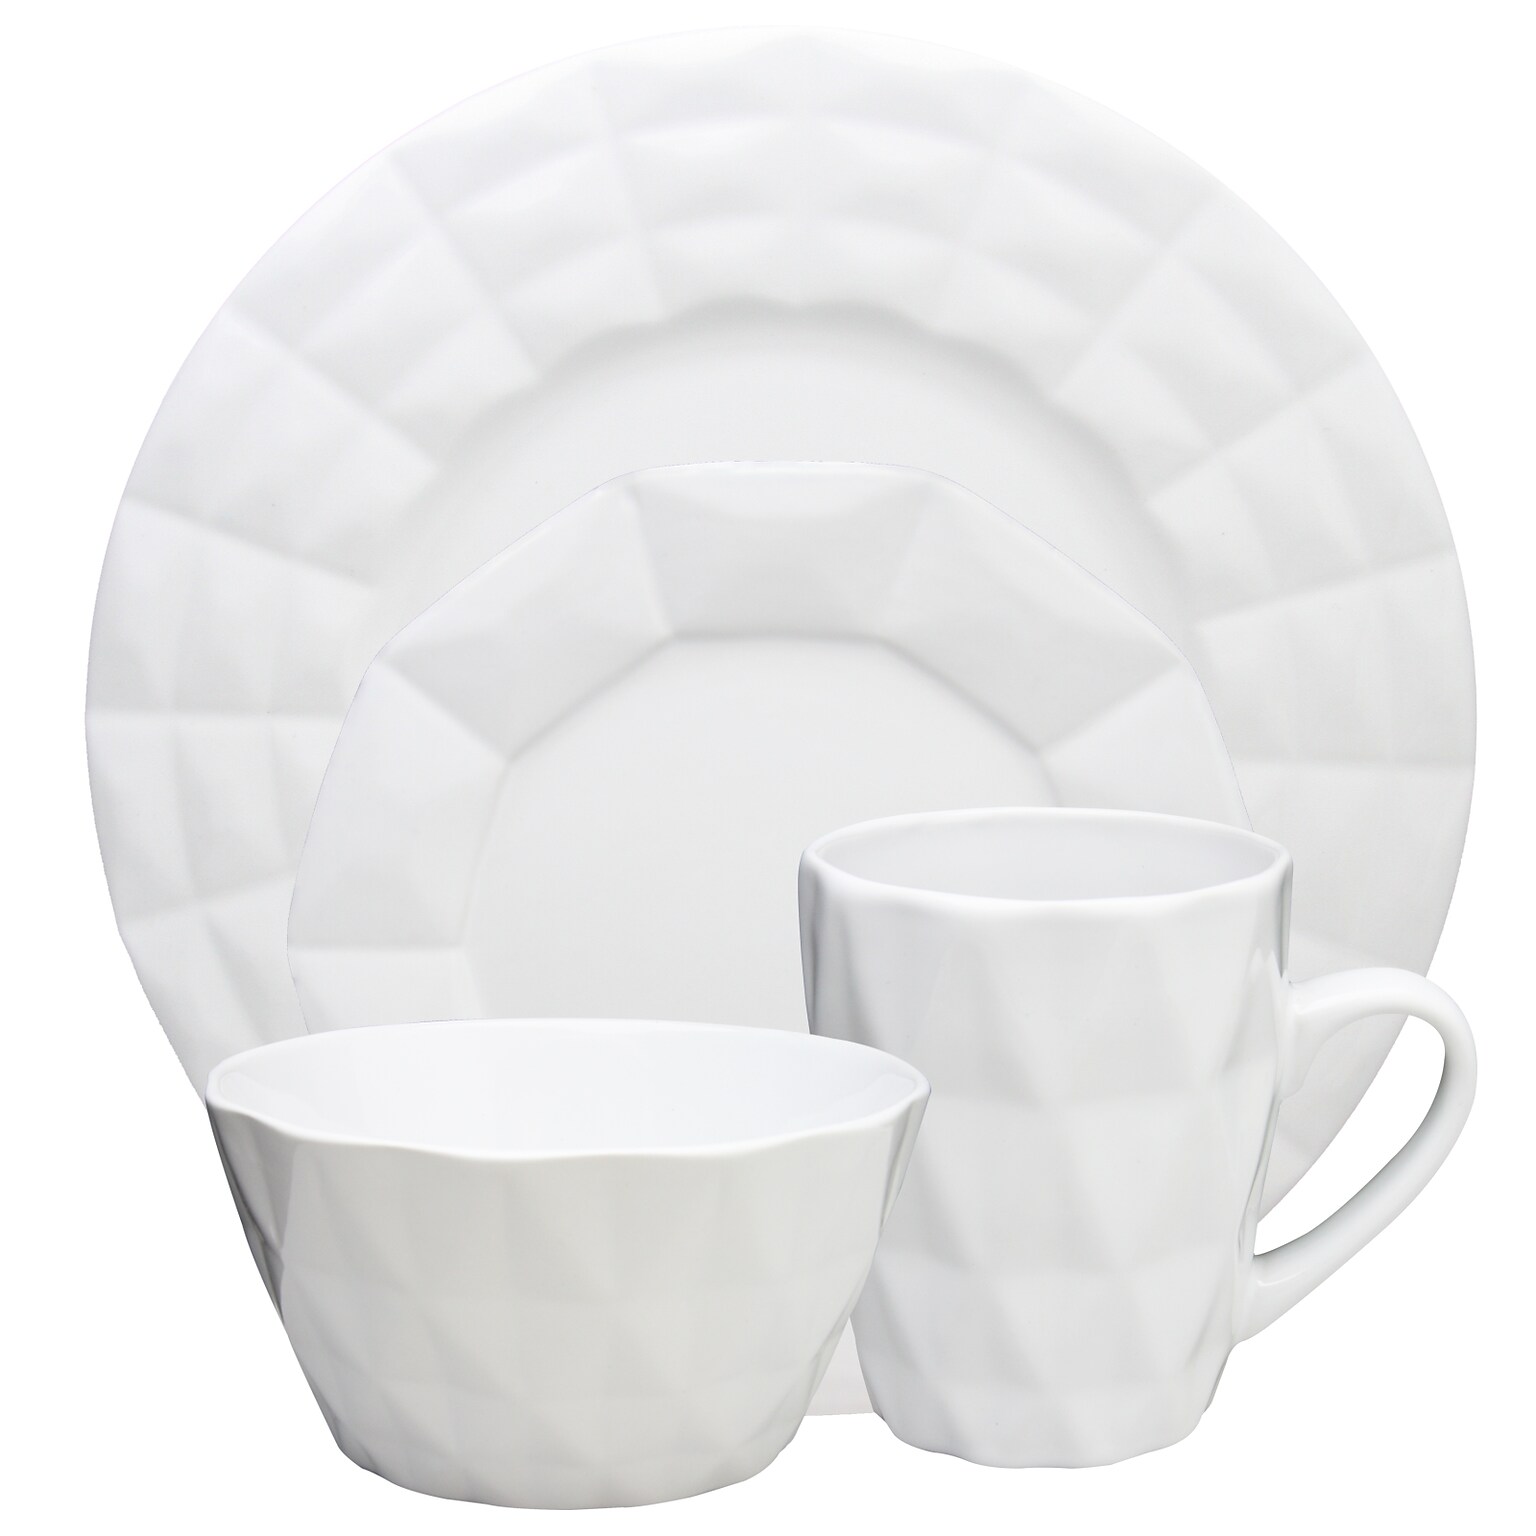 Elama Retro Chic 16-Piece Stoneware Dinnerware Set White  ELM-RETROCHIC-WHITE